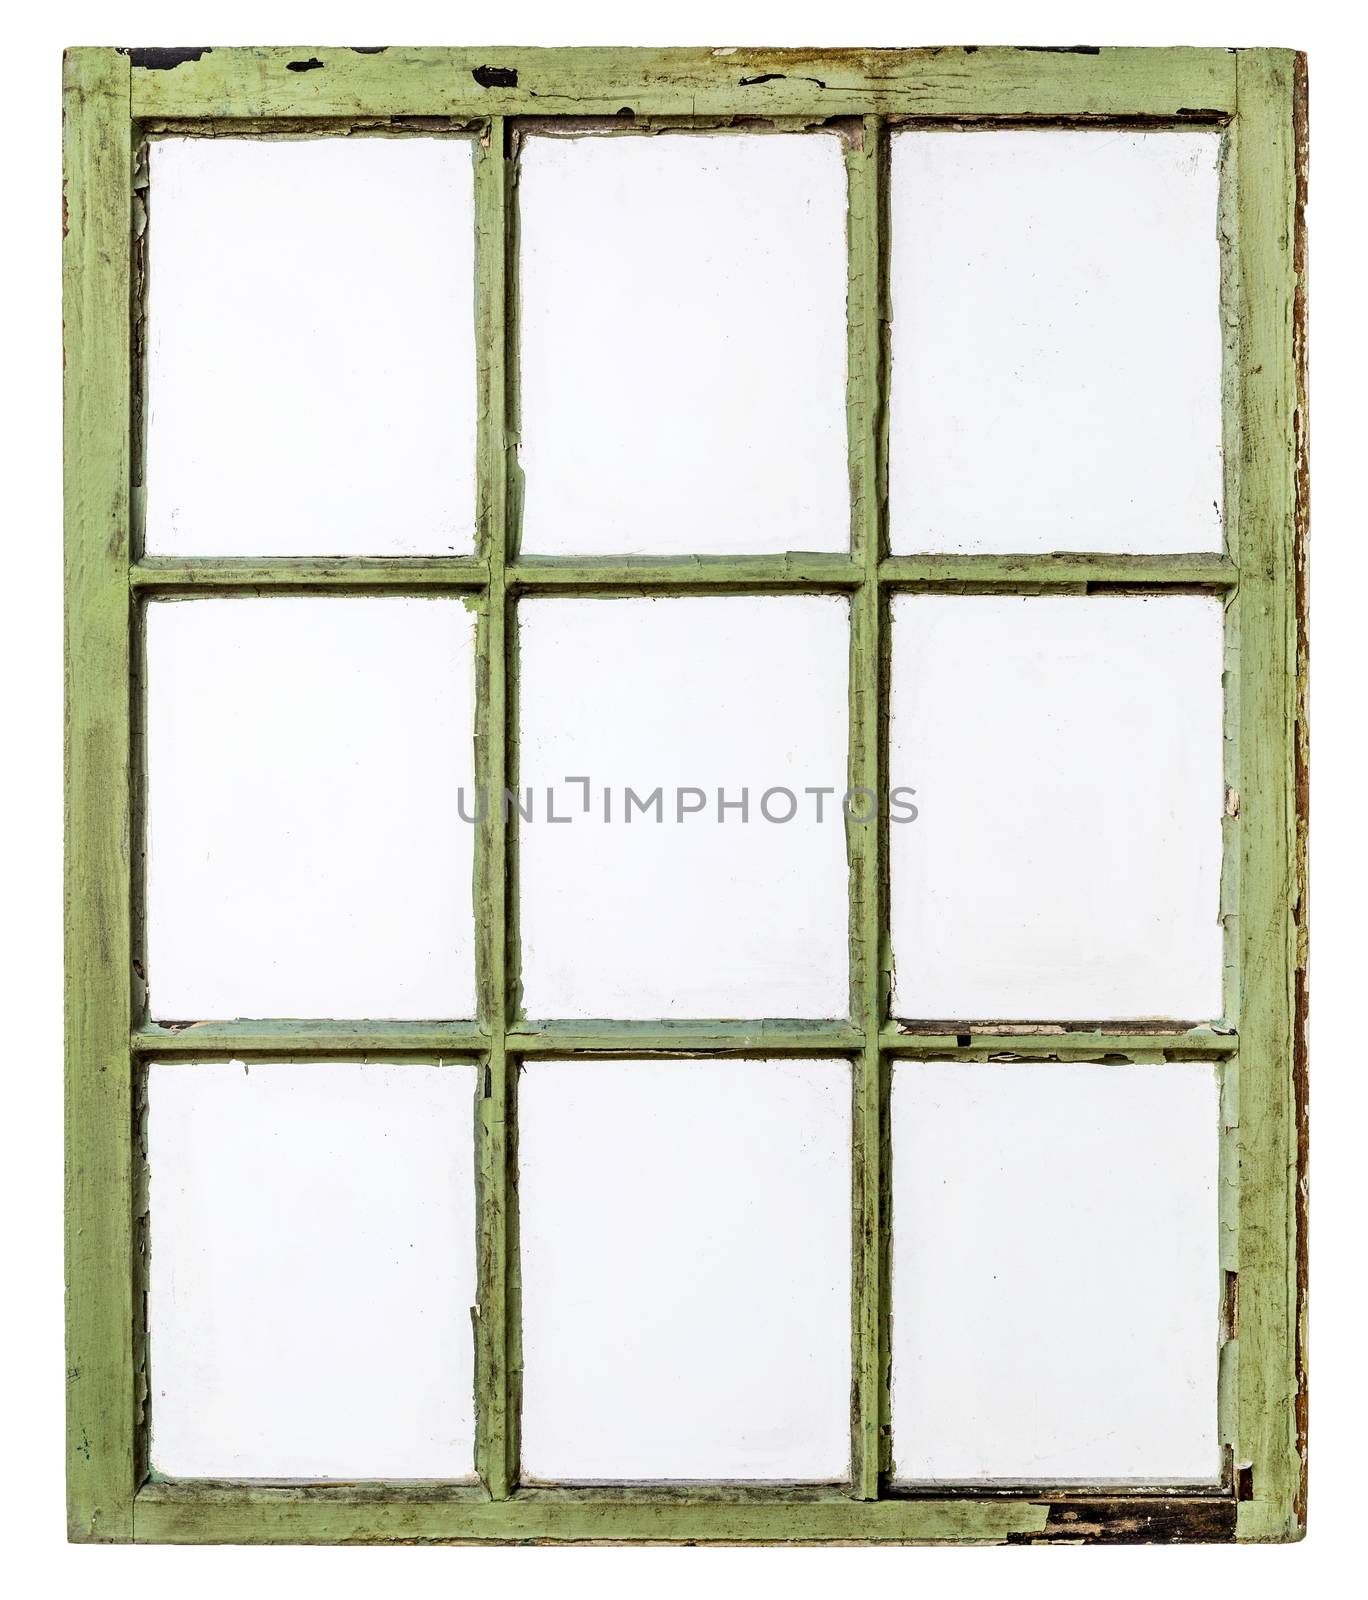 vintage sash window panel by PixelsAway